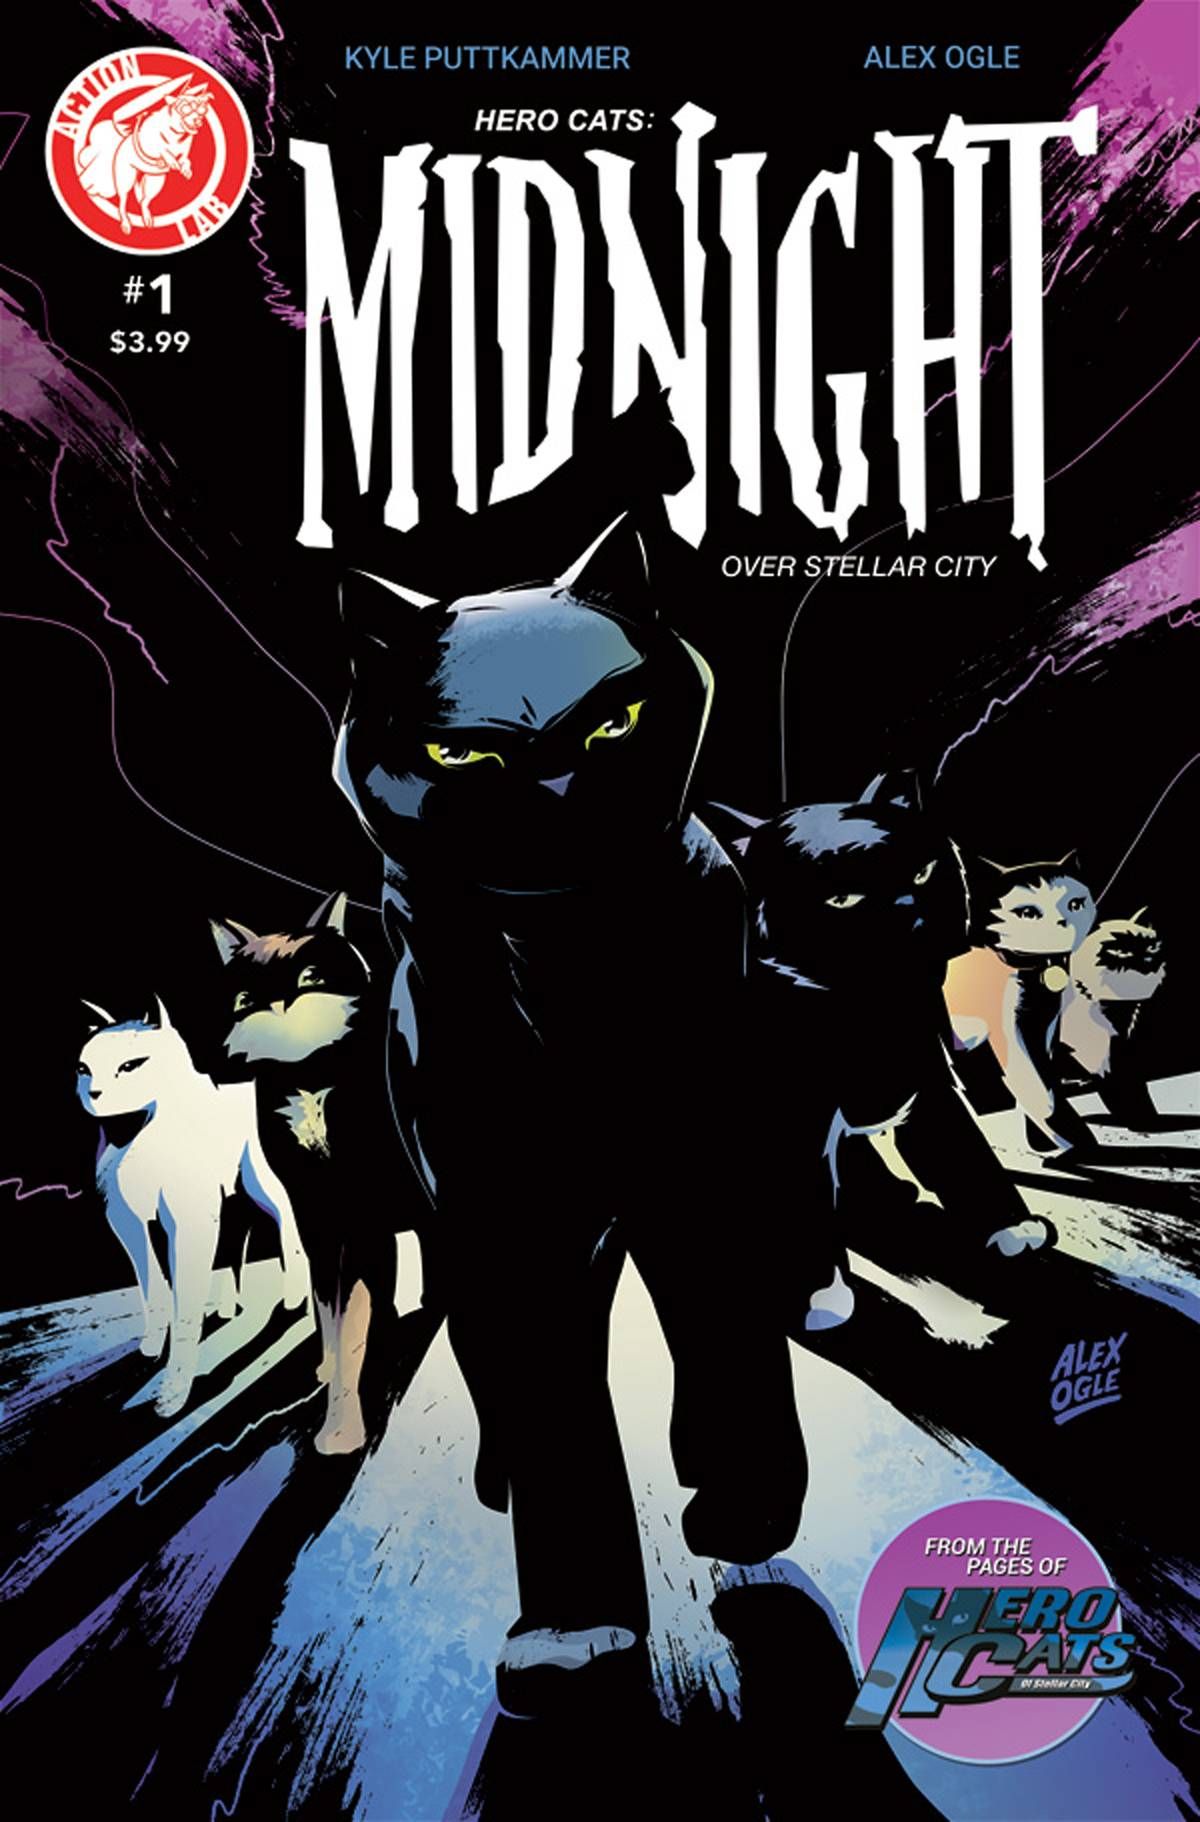 Hero Cats Midnight Over Stellar City #1 Comic